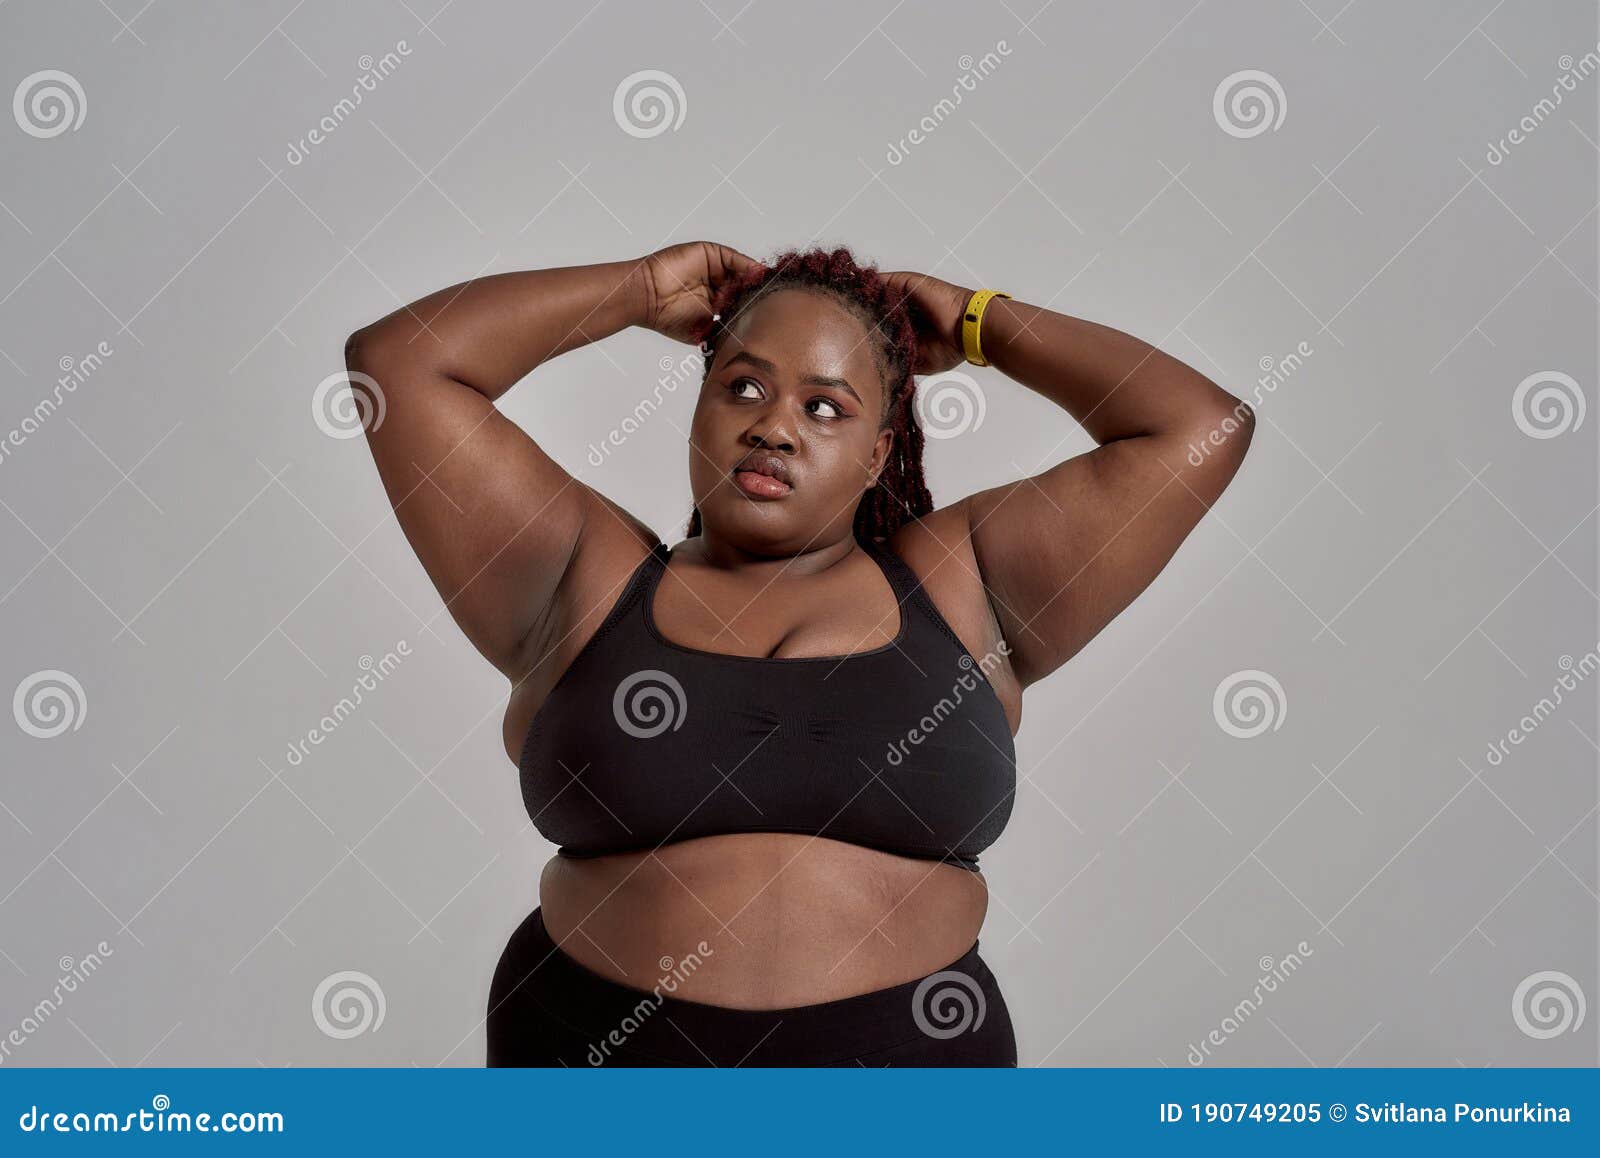 Plump, Plus Size African American Woman in Black Sportswear